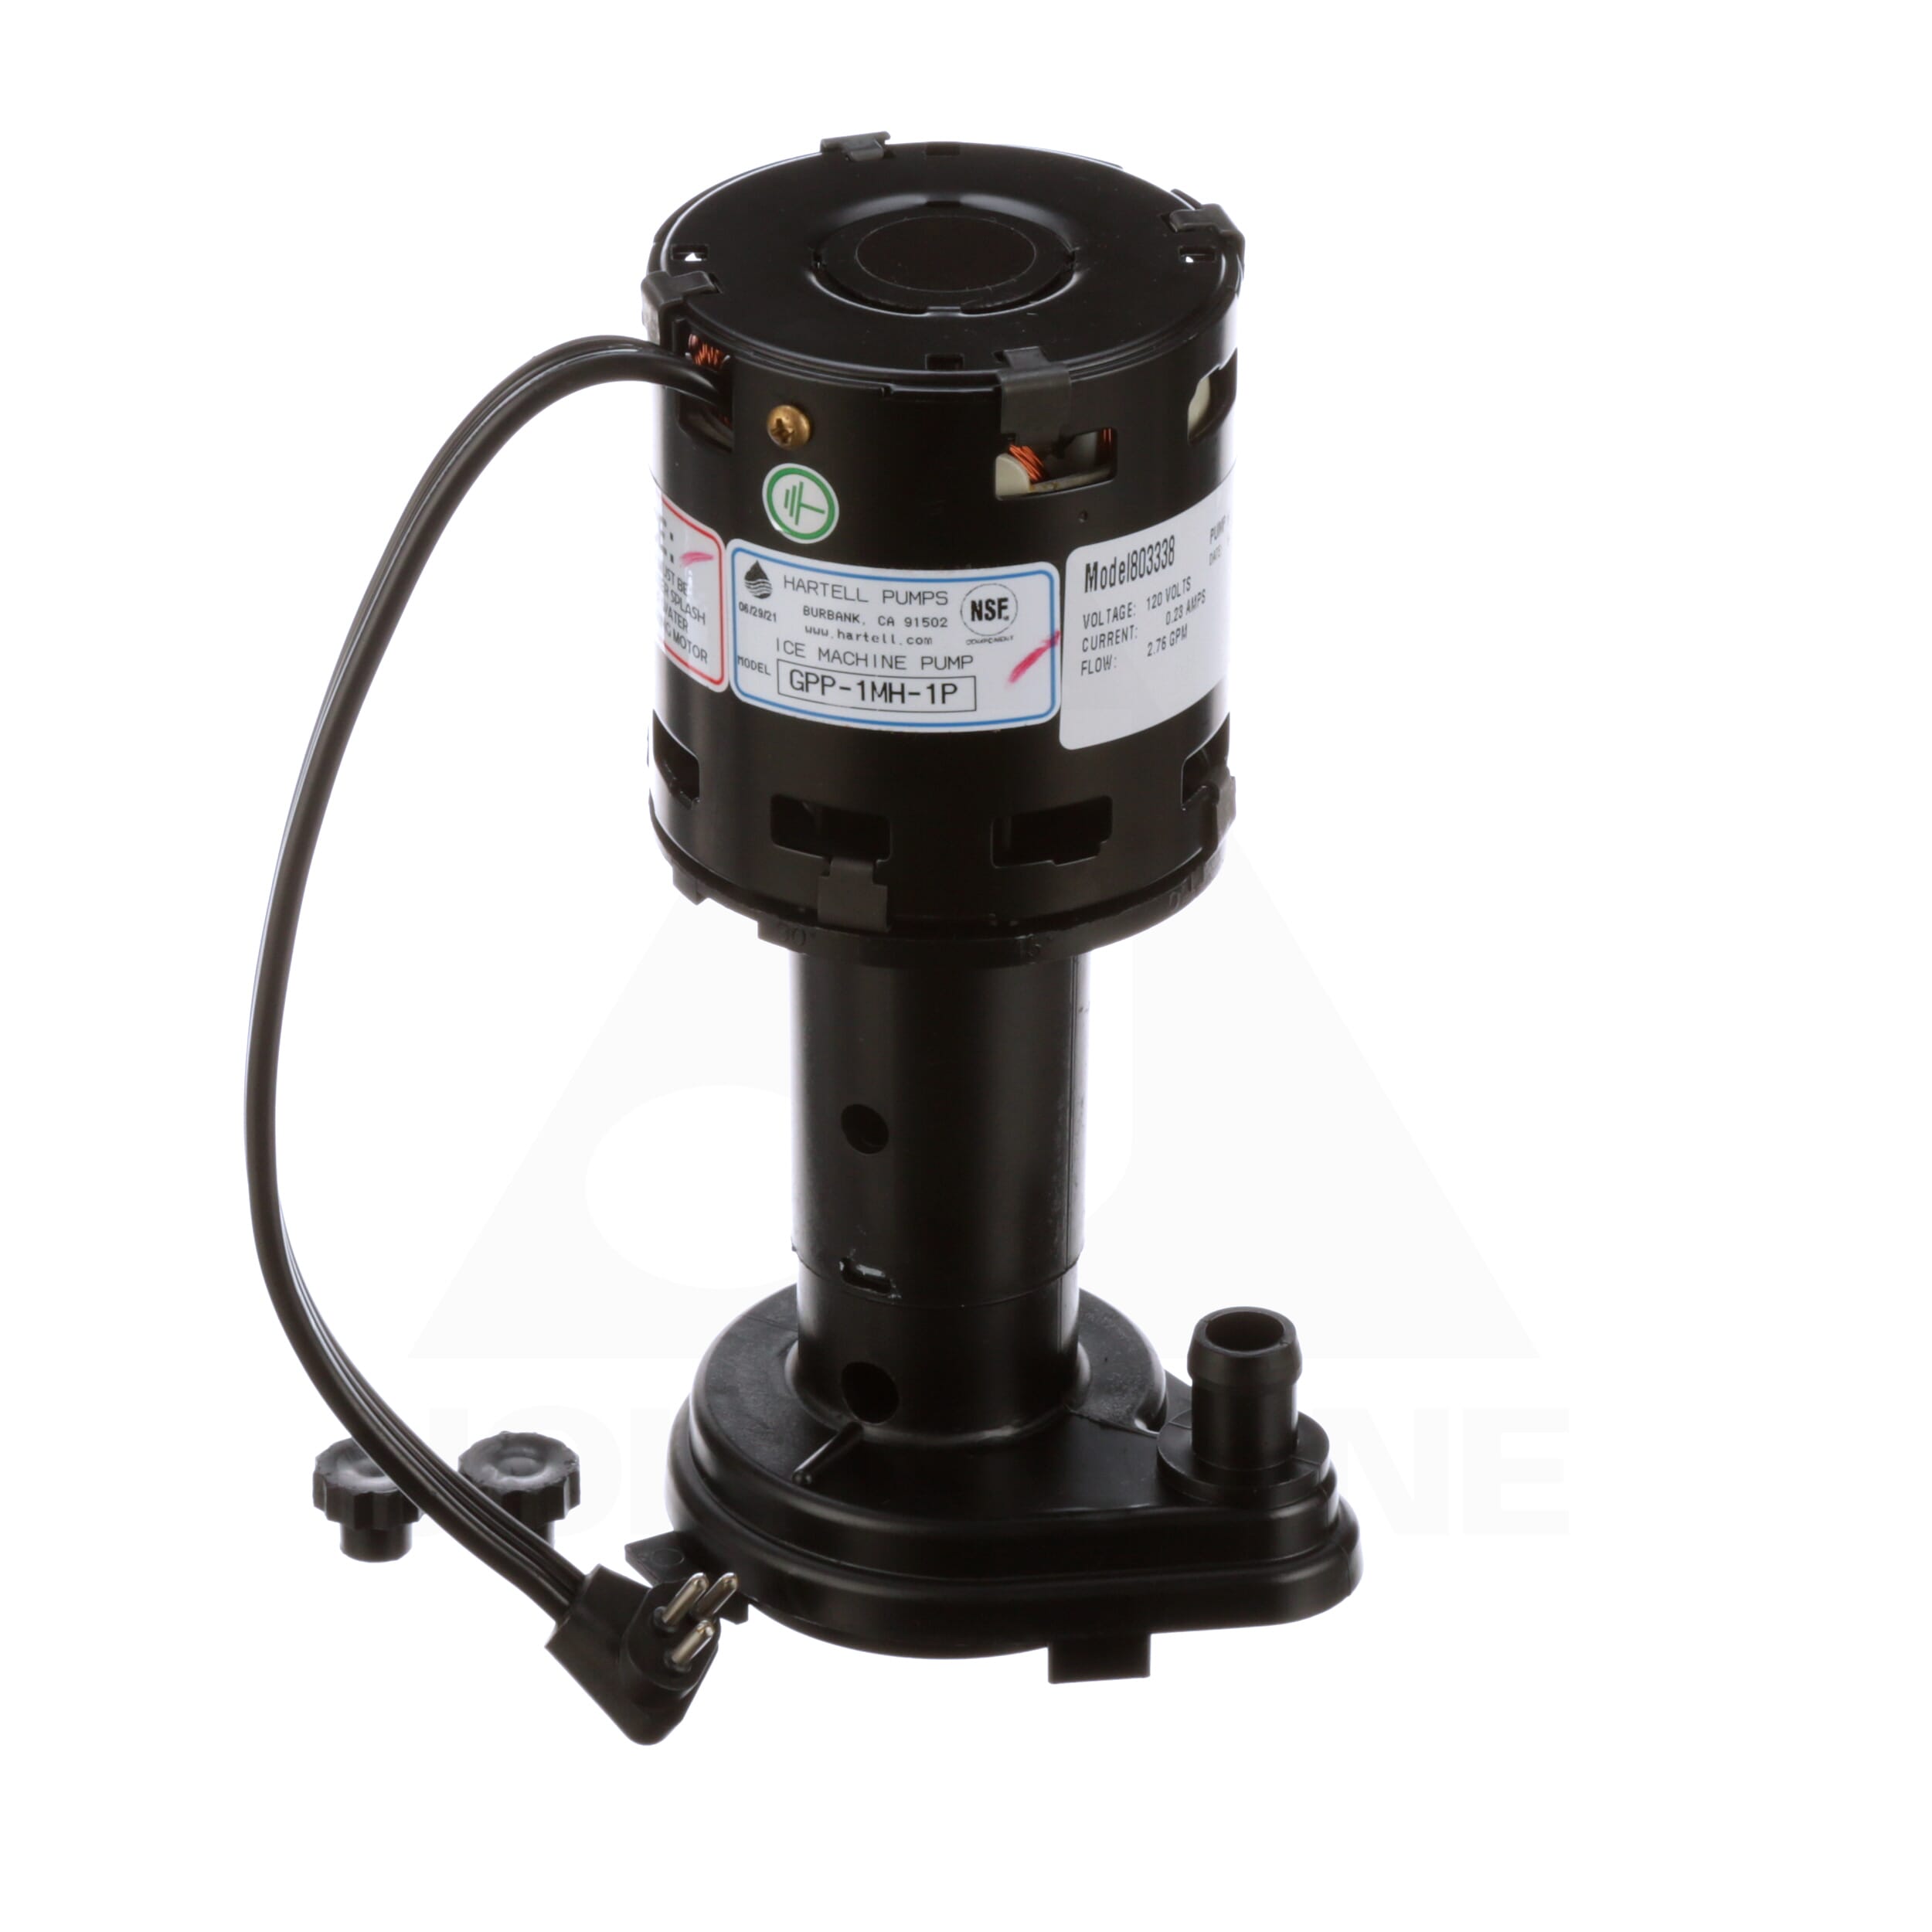 Hartell Gpp-1mh-1p 803338 Ice Machine Water Pump for sale online 